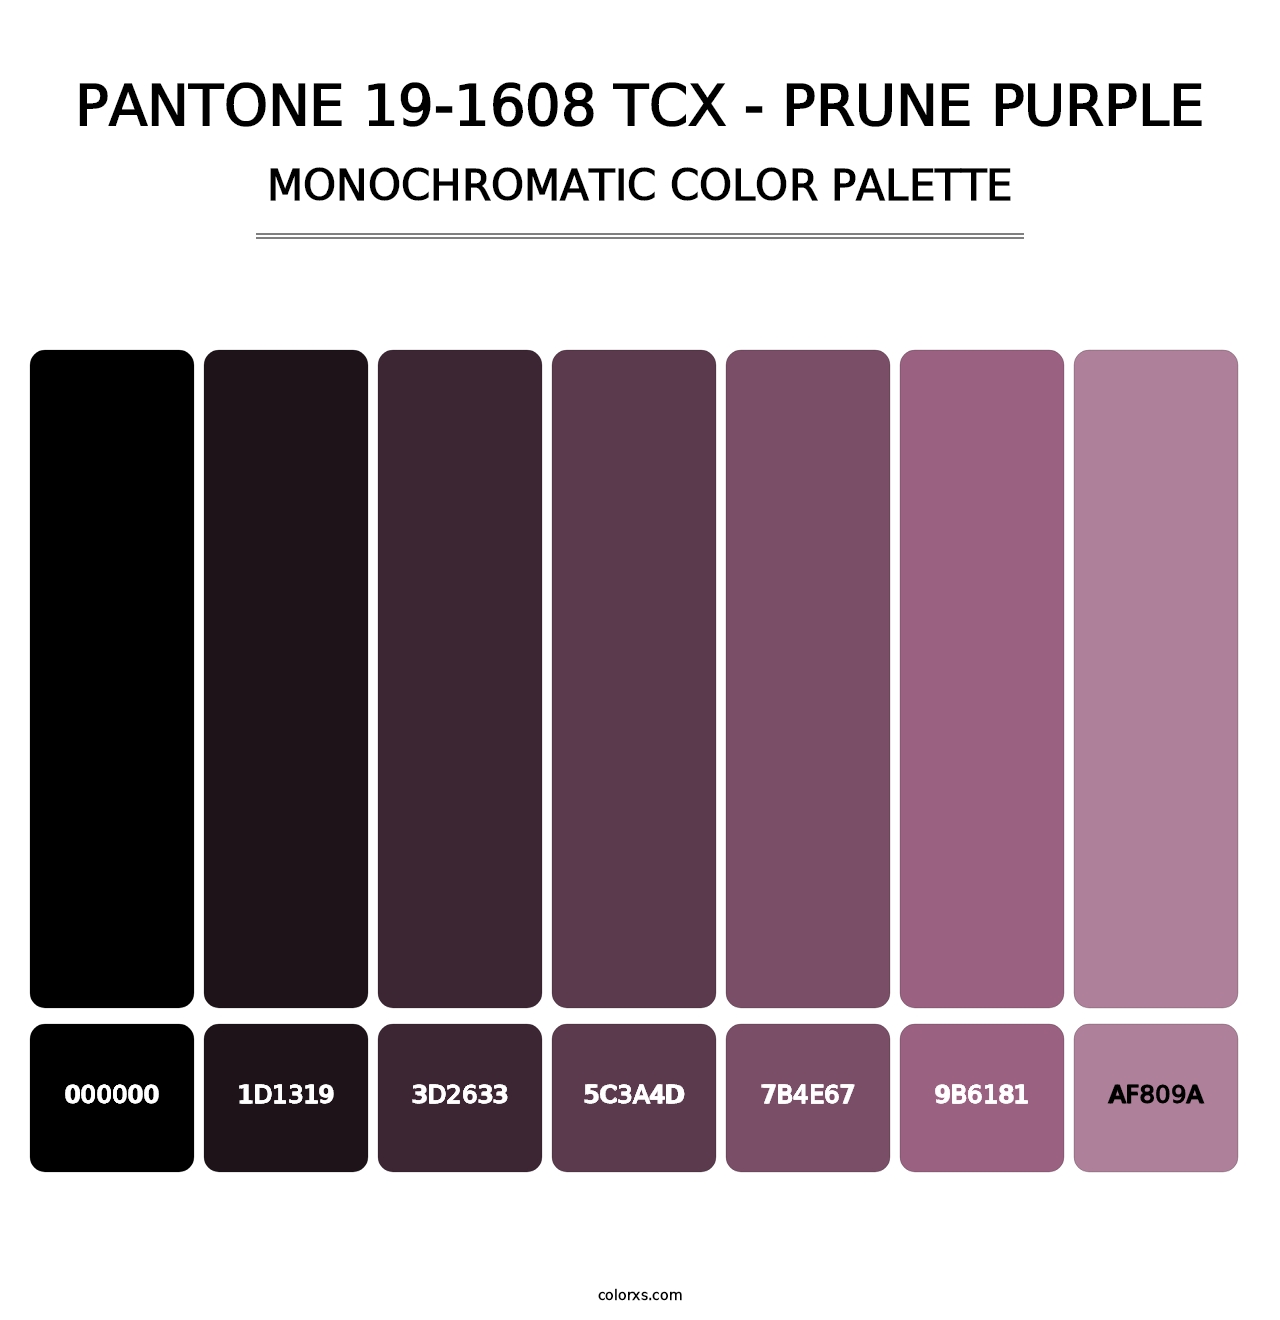 PANTONE 19-1608 TCX - Prune Purple - Monochromatic Color Palette